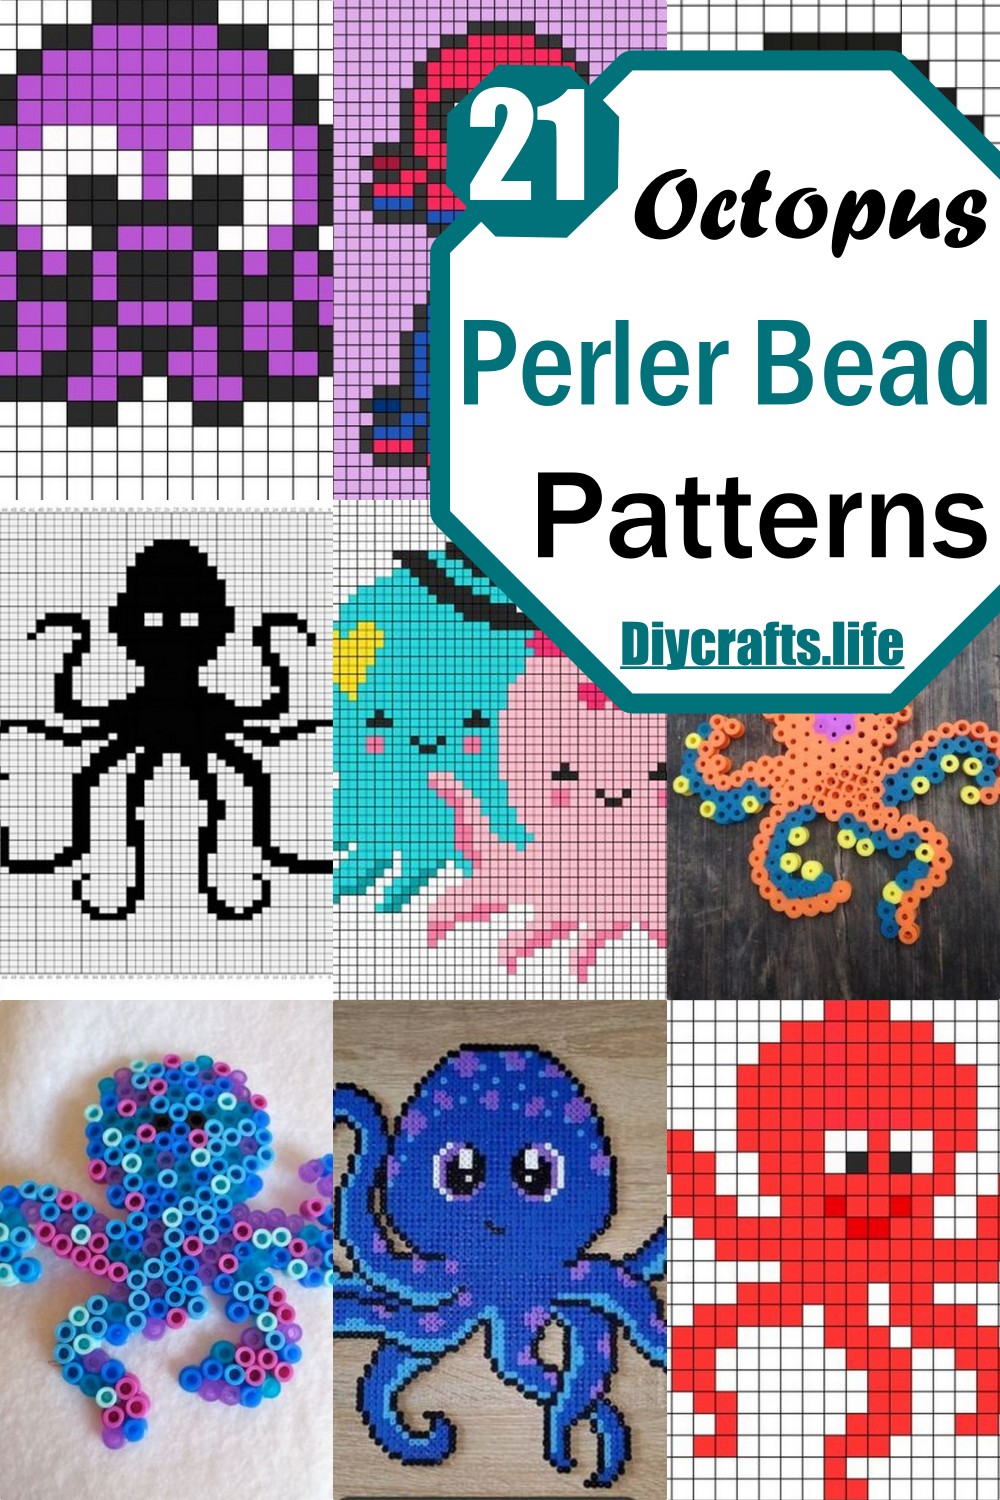 Octopus Perler Bead Patterns